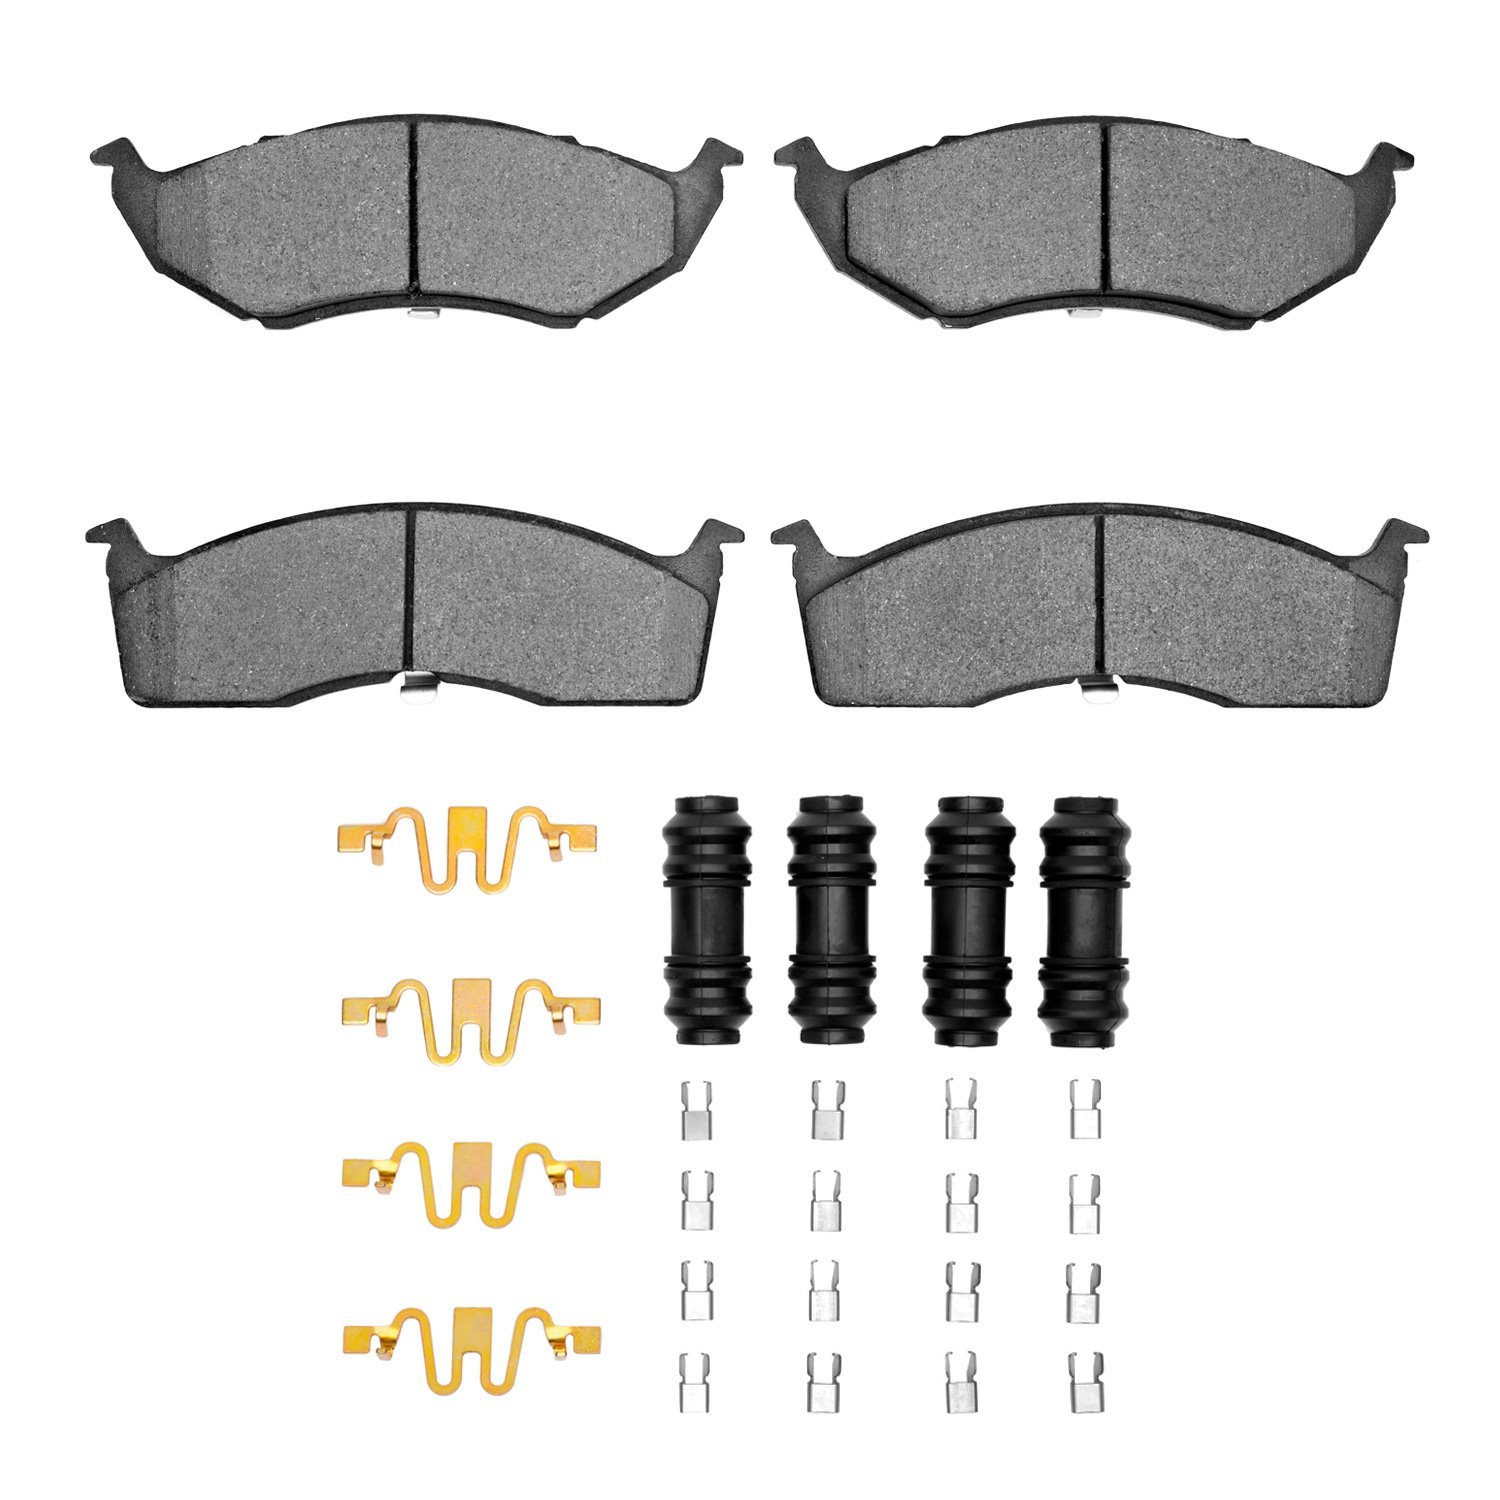 1310-0730-01 3000-Series Ceramic Brake Pads & Hardware Kit, 1998-2004 Mopar, Position: Front